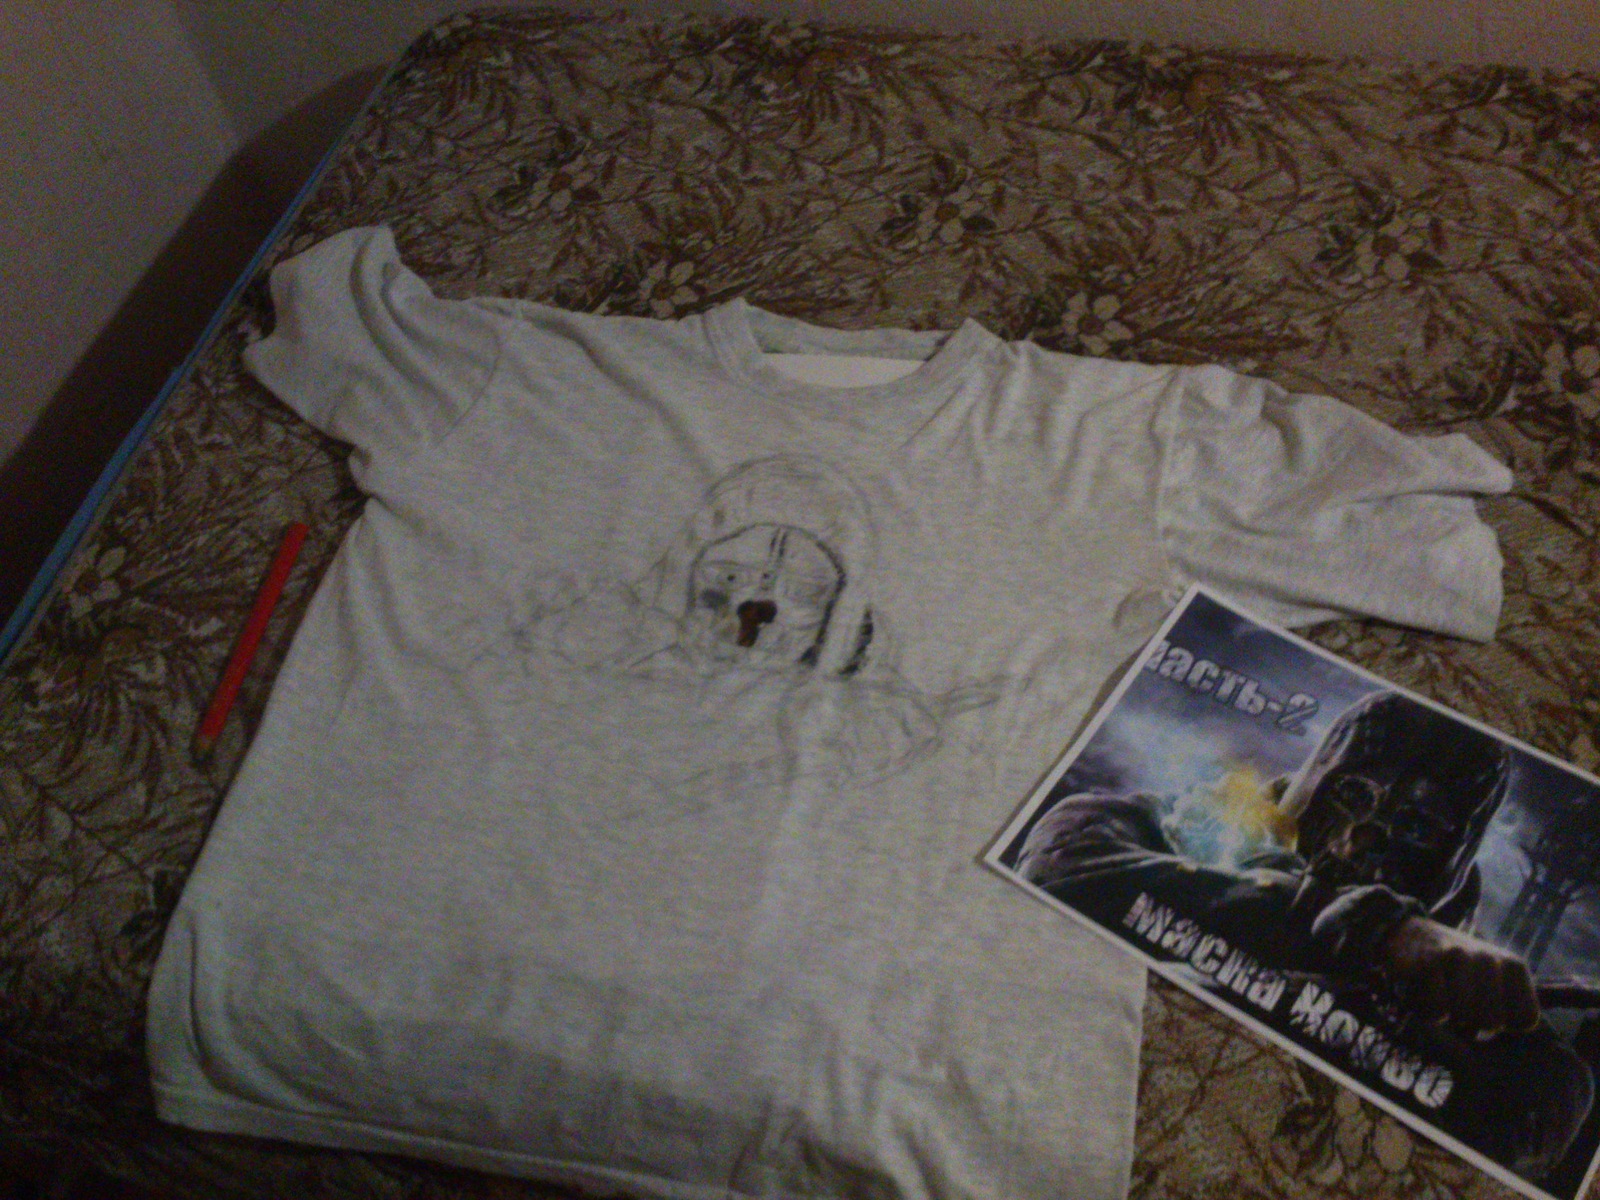 Corvo Attano on a T-shirt - My, Acrylic, Dishonored, Corvo Attano, , T-shirt, , Longpost, Error